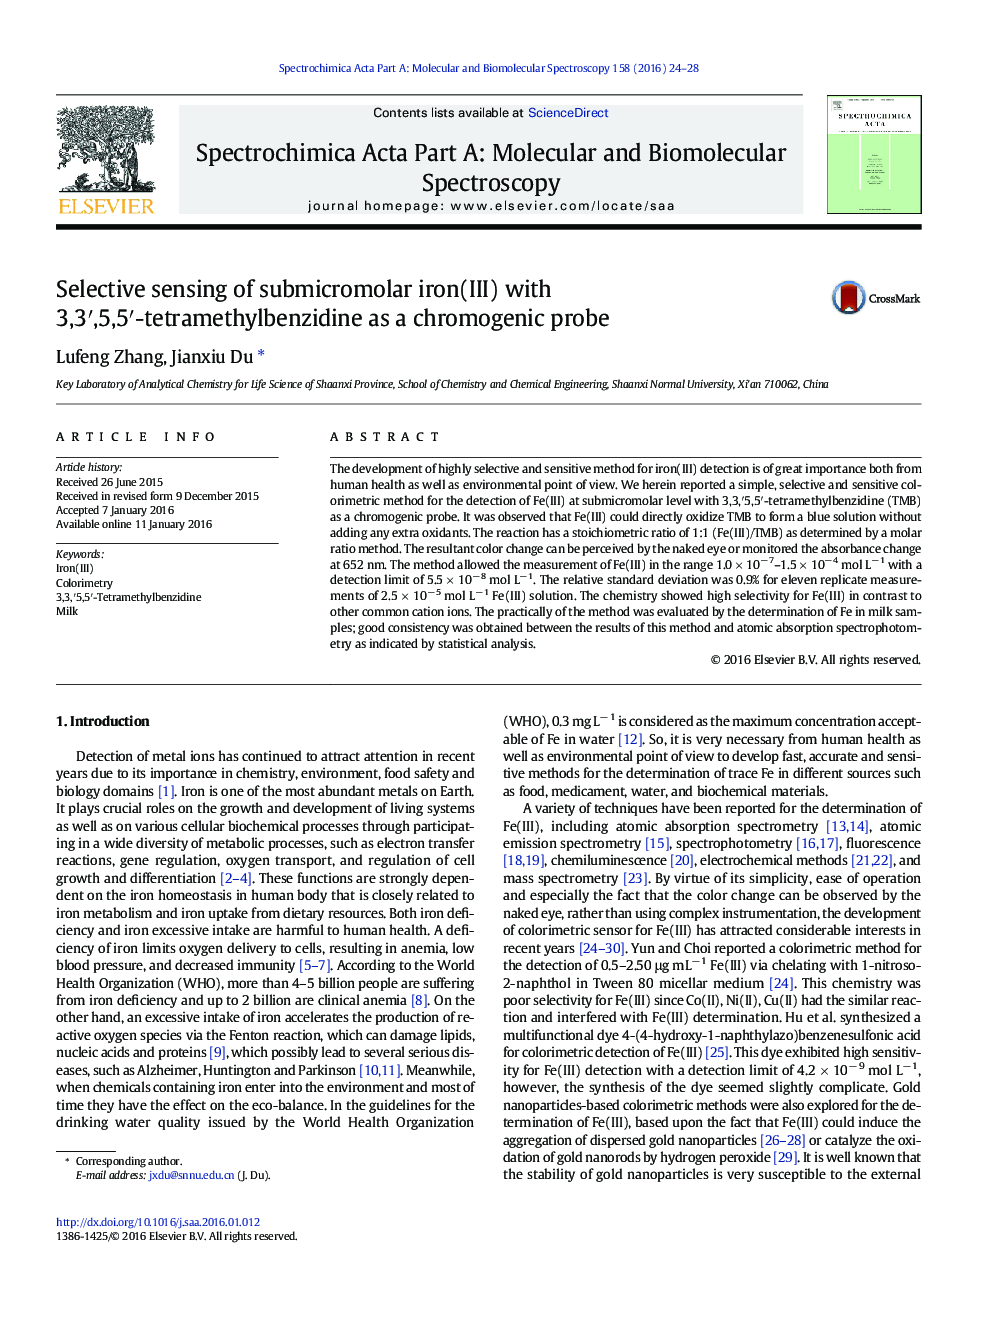 Selective sensing of submicromolar iron(III) with 3,3′,5,5′-tetramethylbenzidine as a chromogenic probe